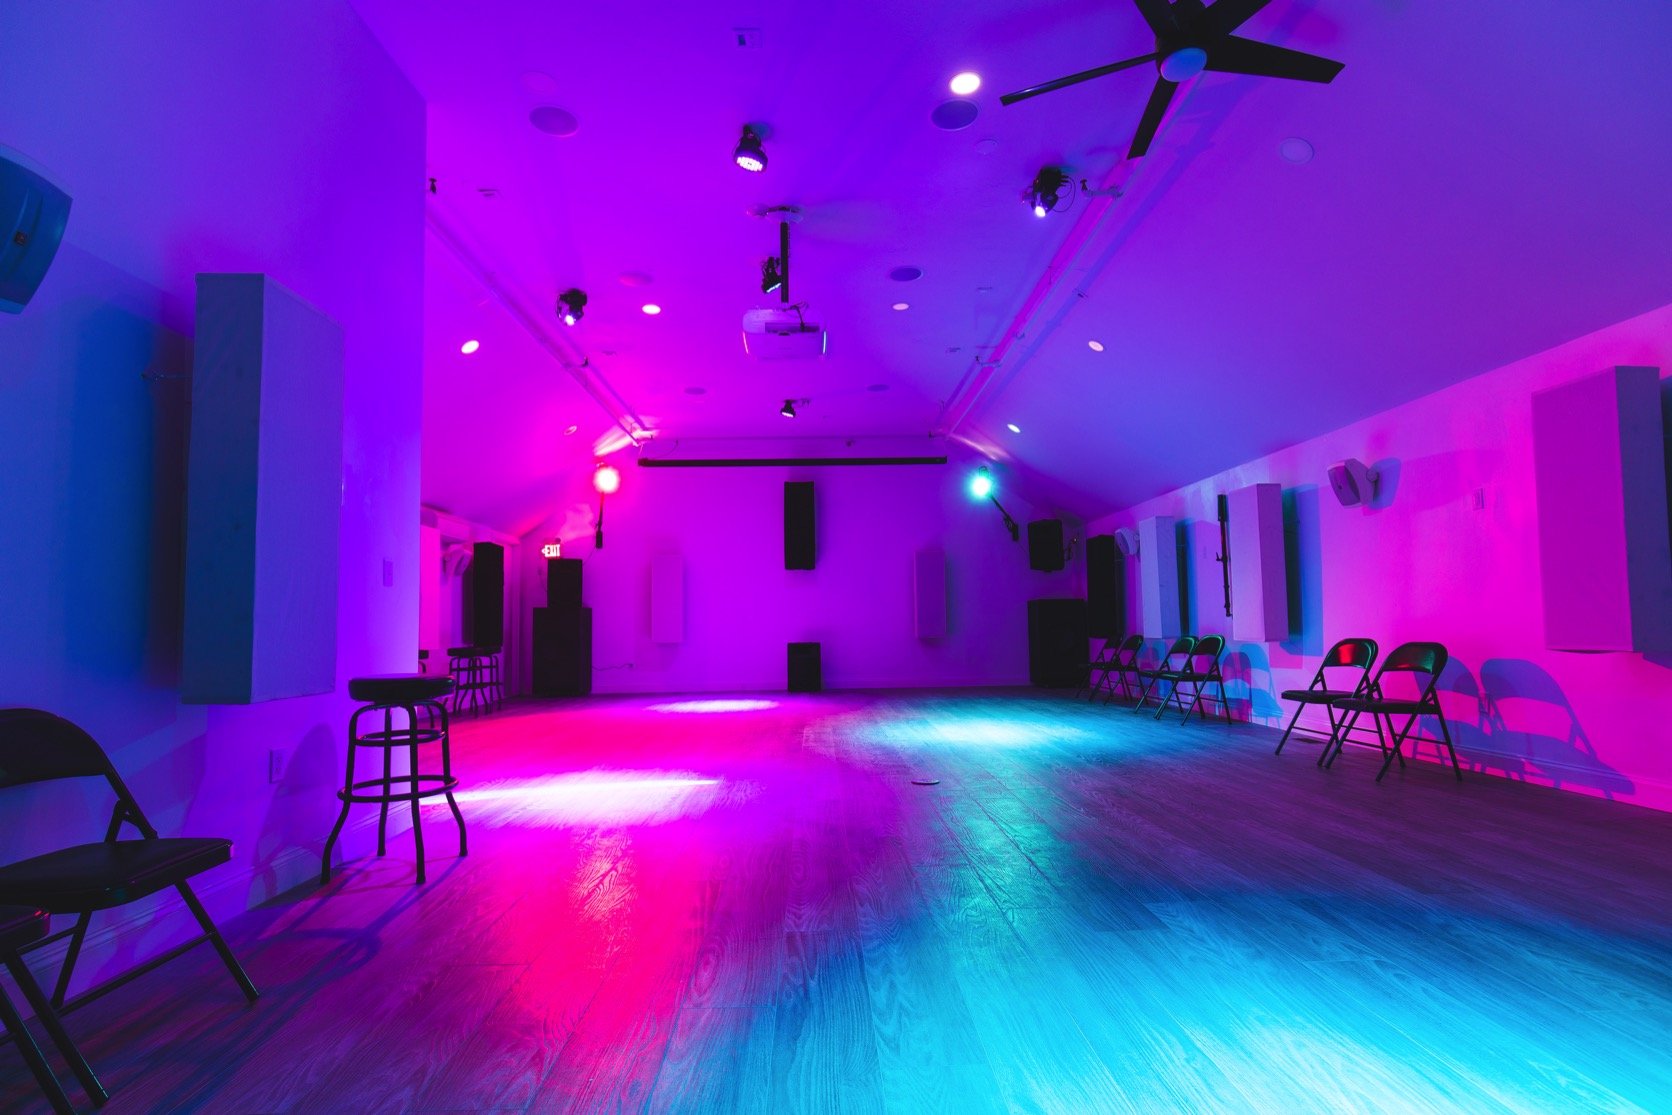 076A5619+Boston Studio+Rental+Stoughton+Event+Function+Hall+Rent+Party+Venue+Dark+Pink+Blue+Uplighting.jpg